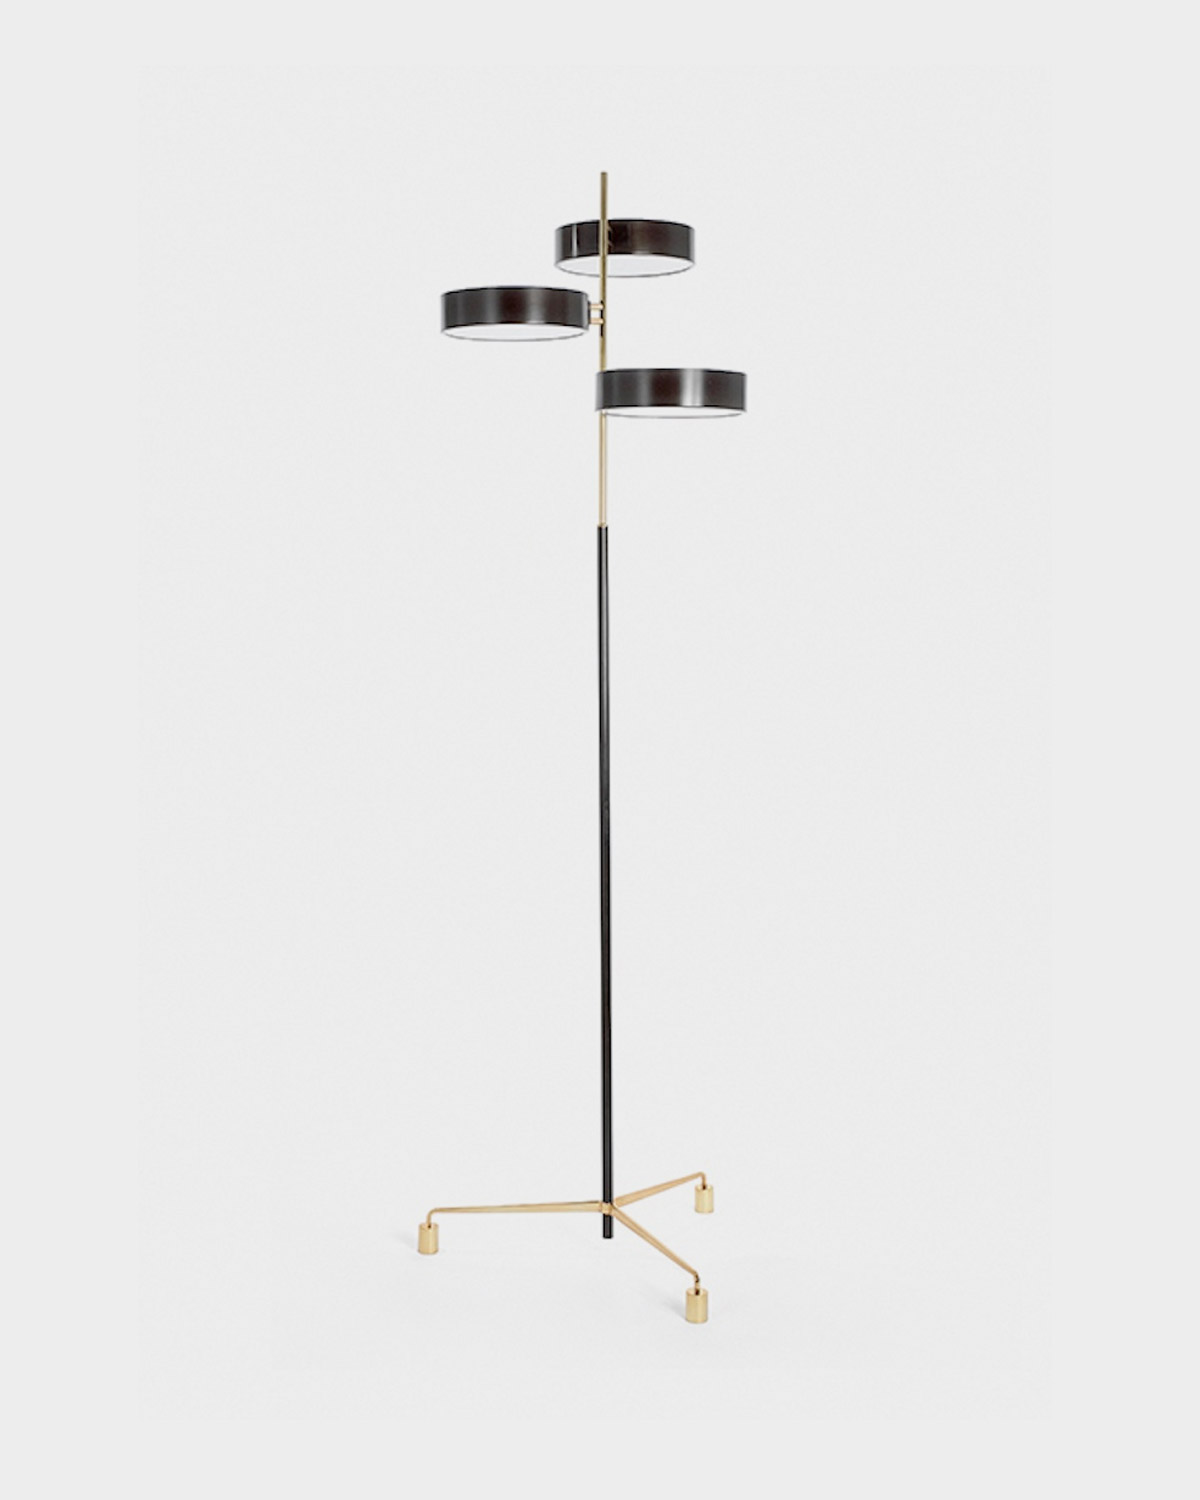 The Abbott Floor Lamp by Studio Van den Akker